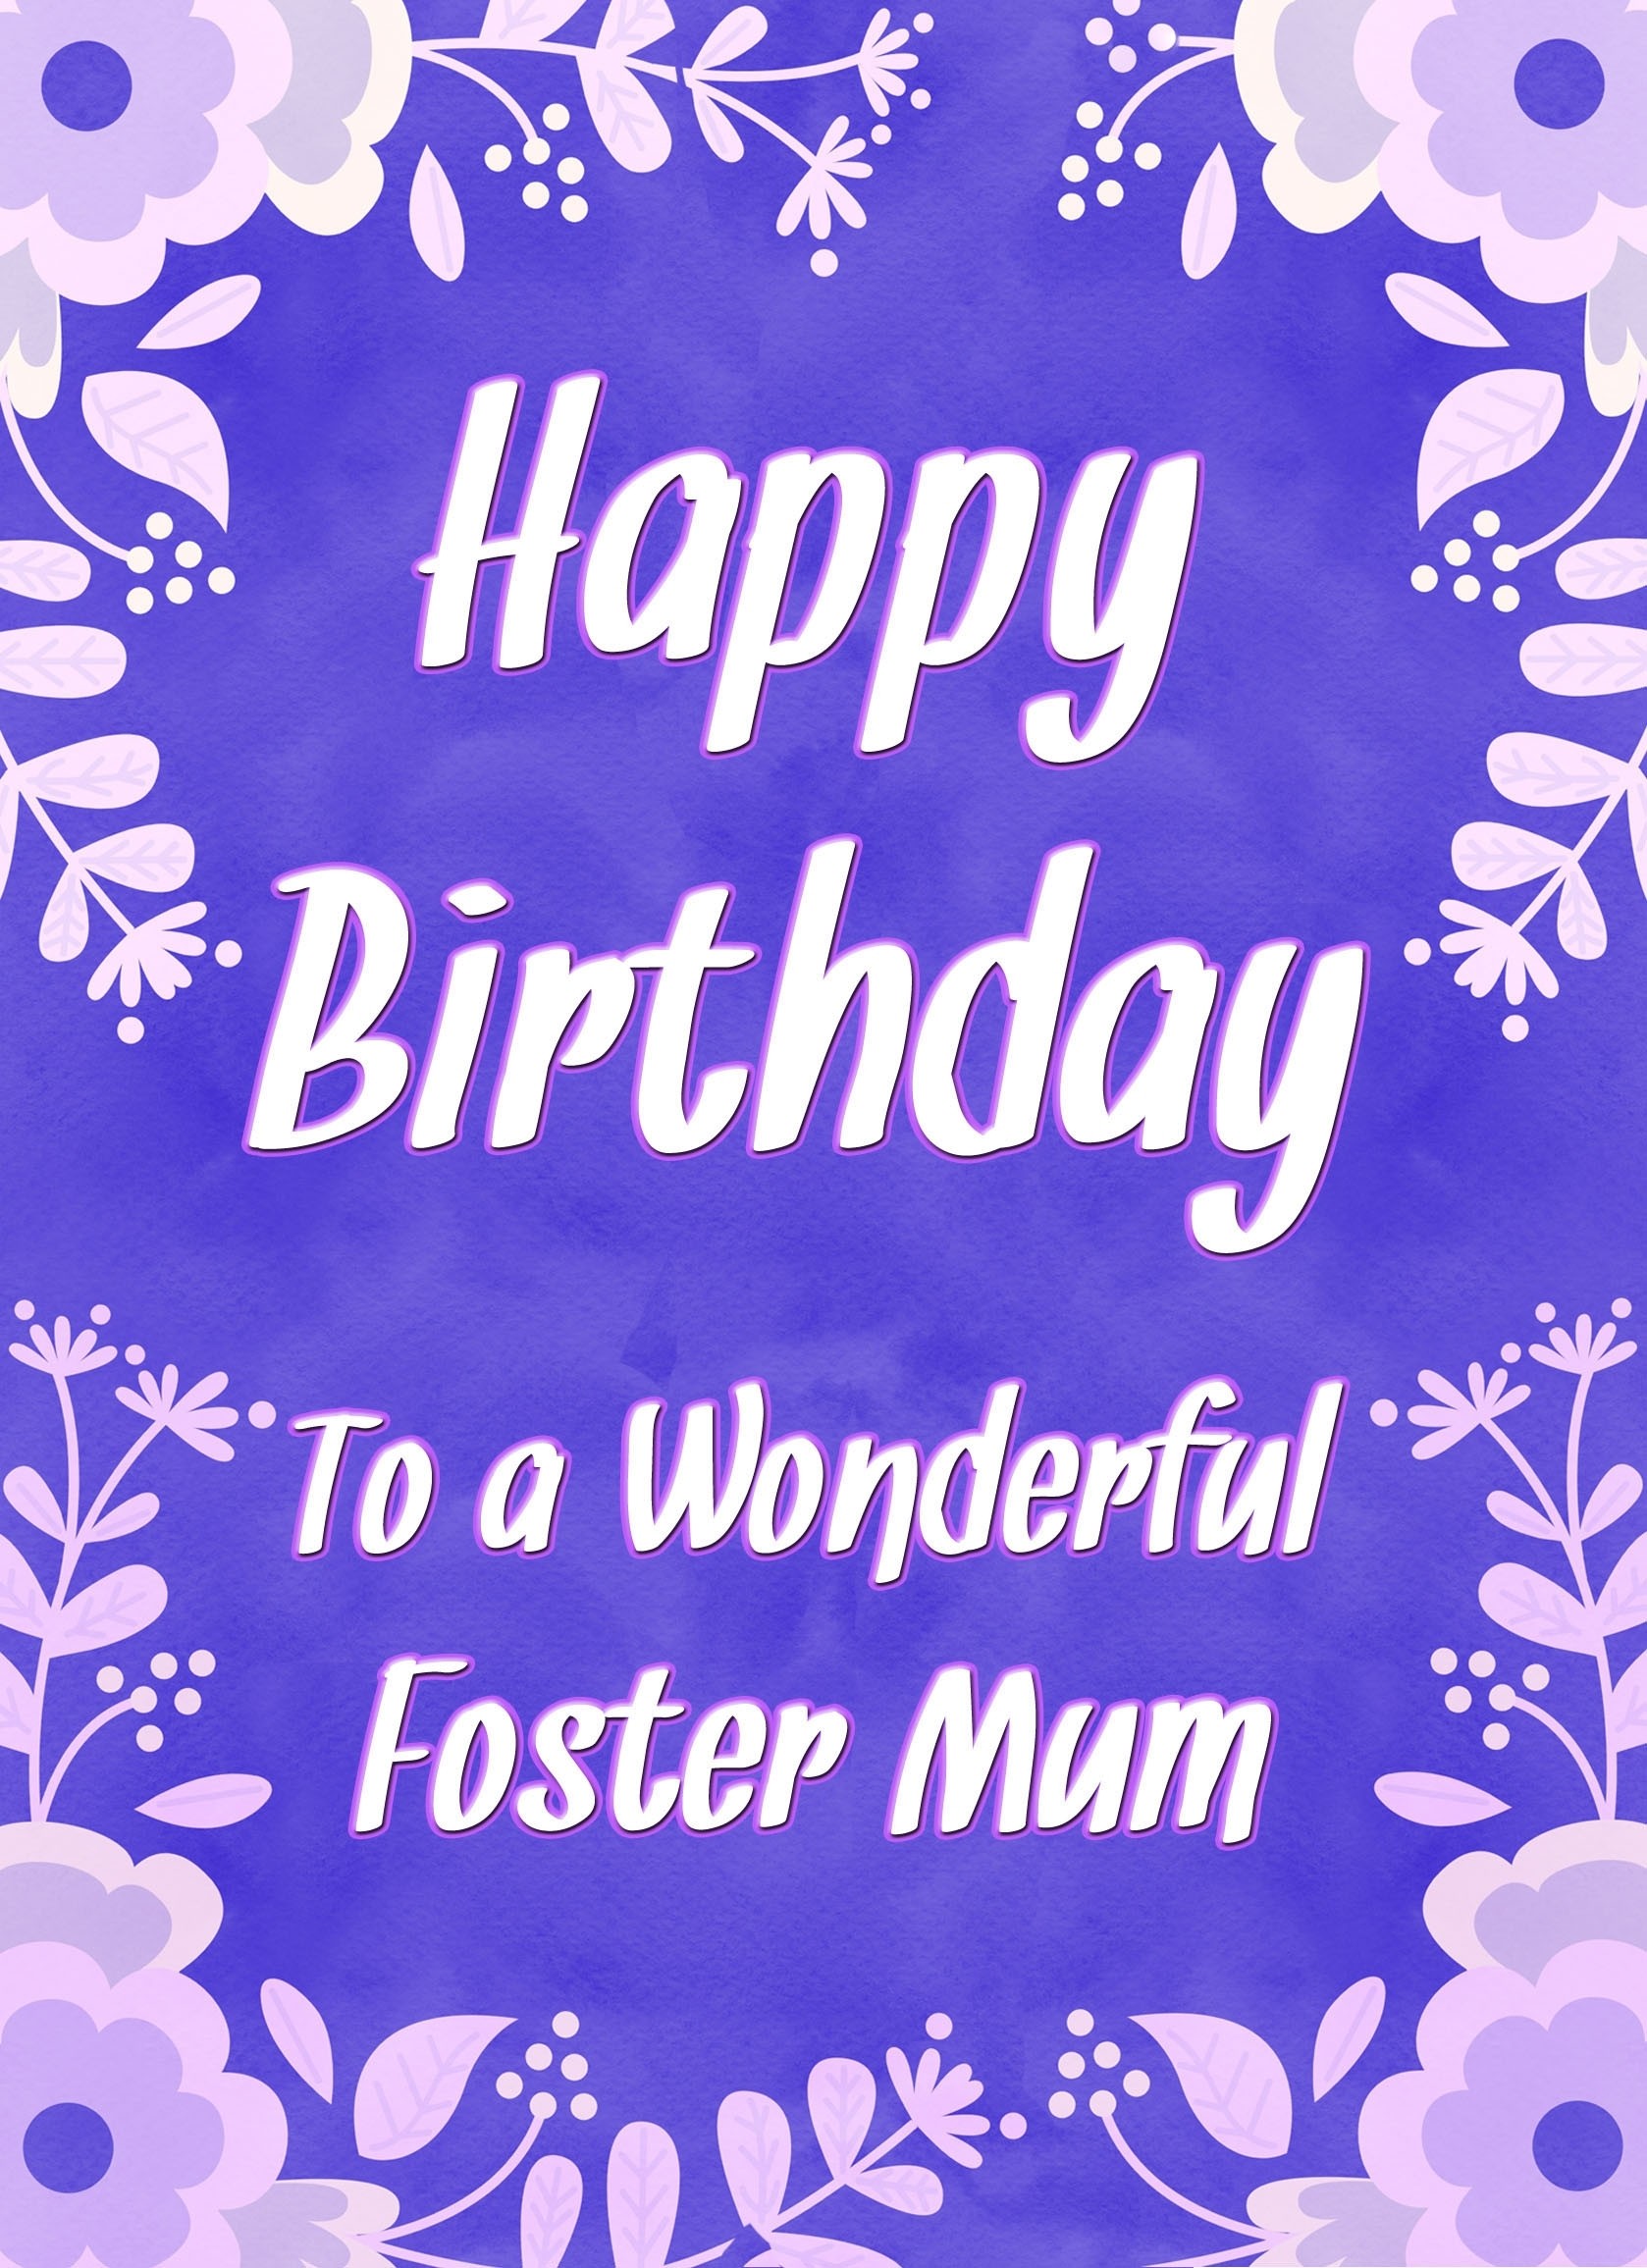 Birthday Card For Wonderful Foster Mum (Purple Border)